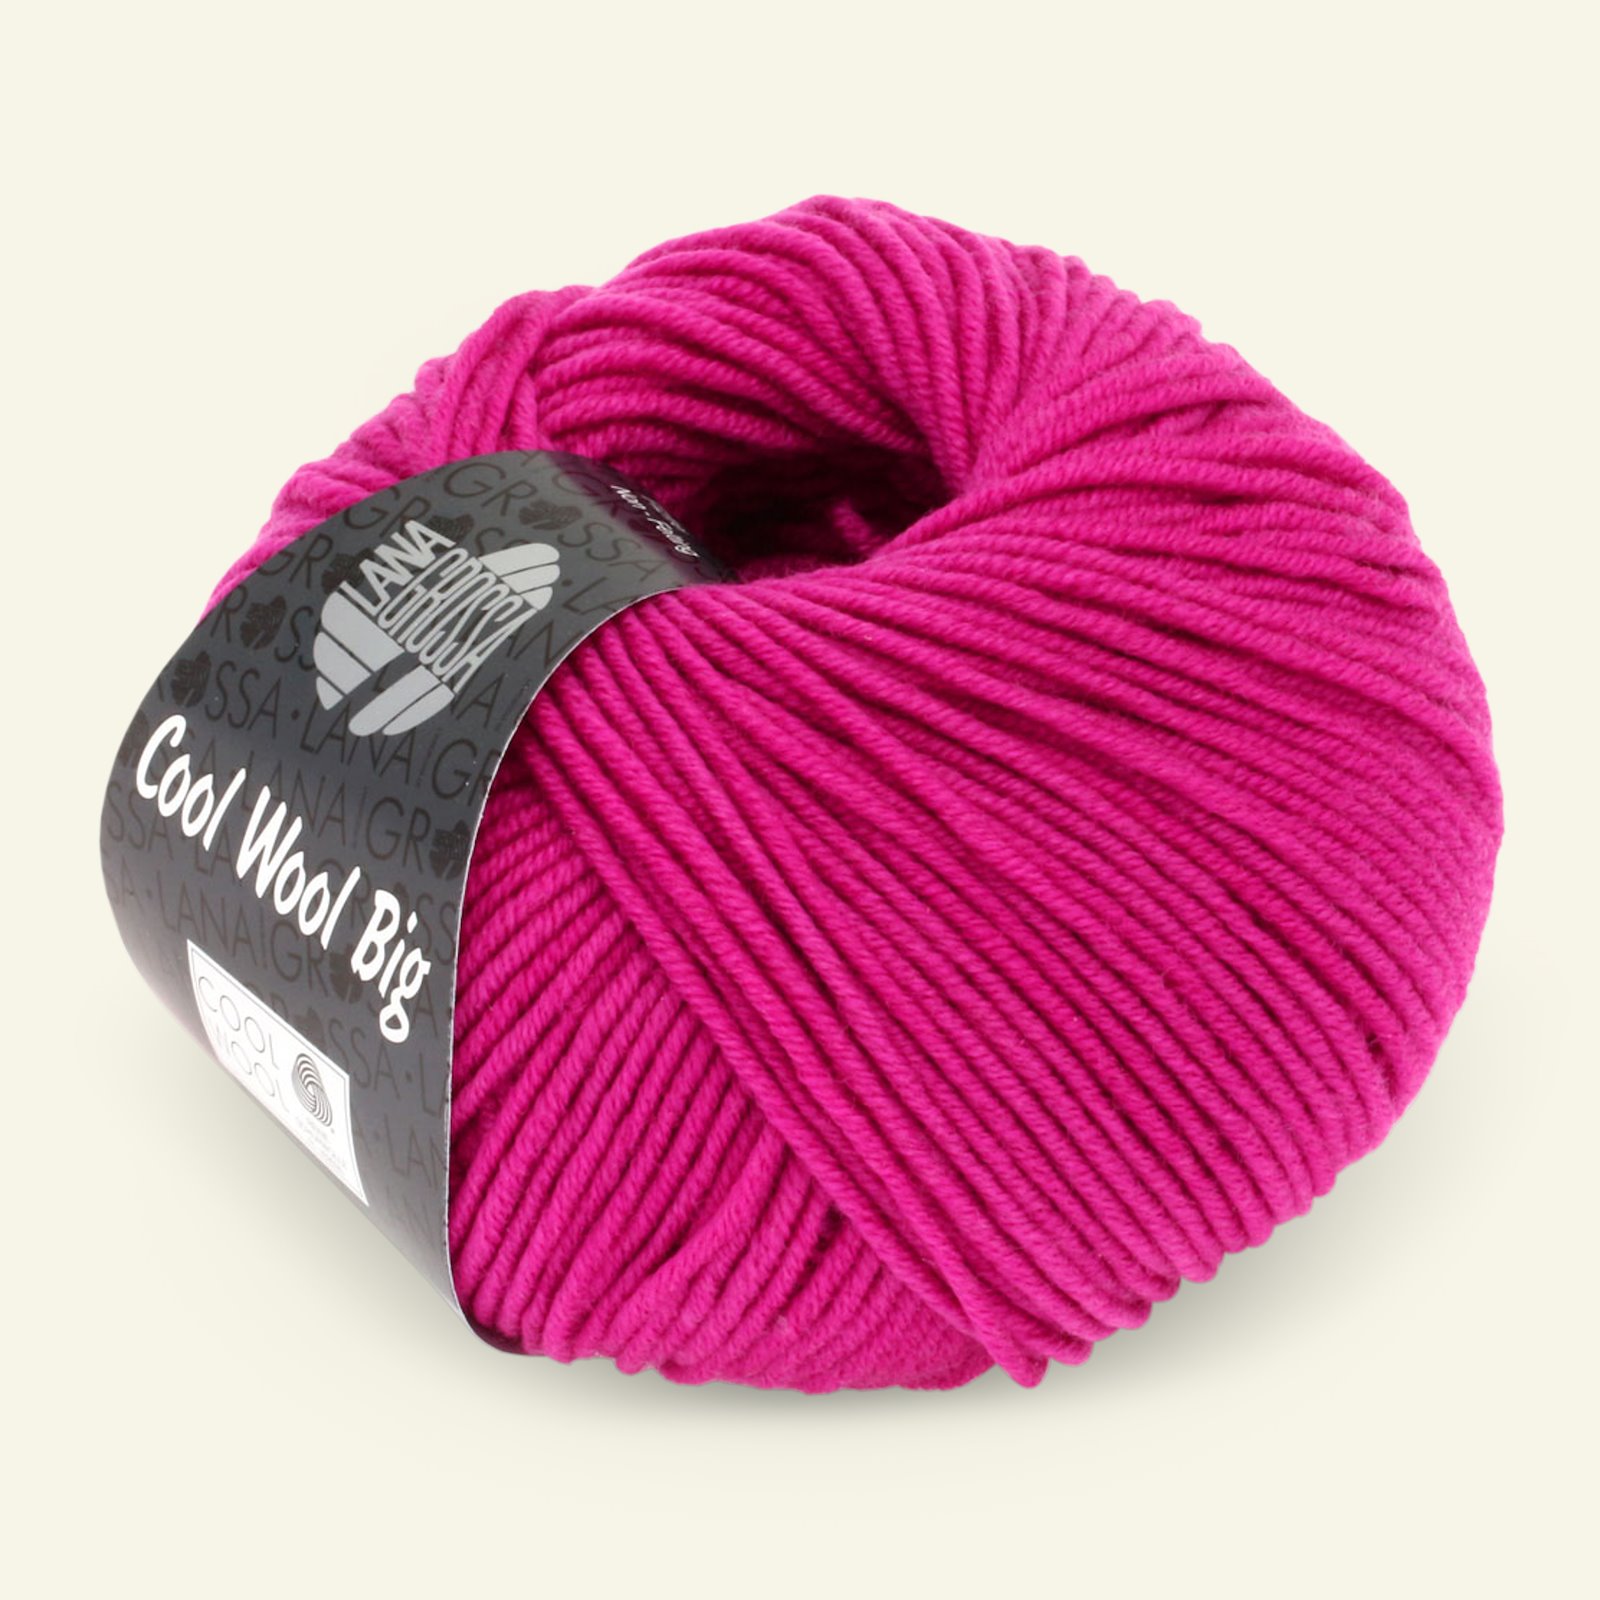 Lana Grossa, extrafin merinouldgarn "Cool Wool Big", varm pink 90001101_pack